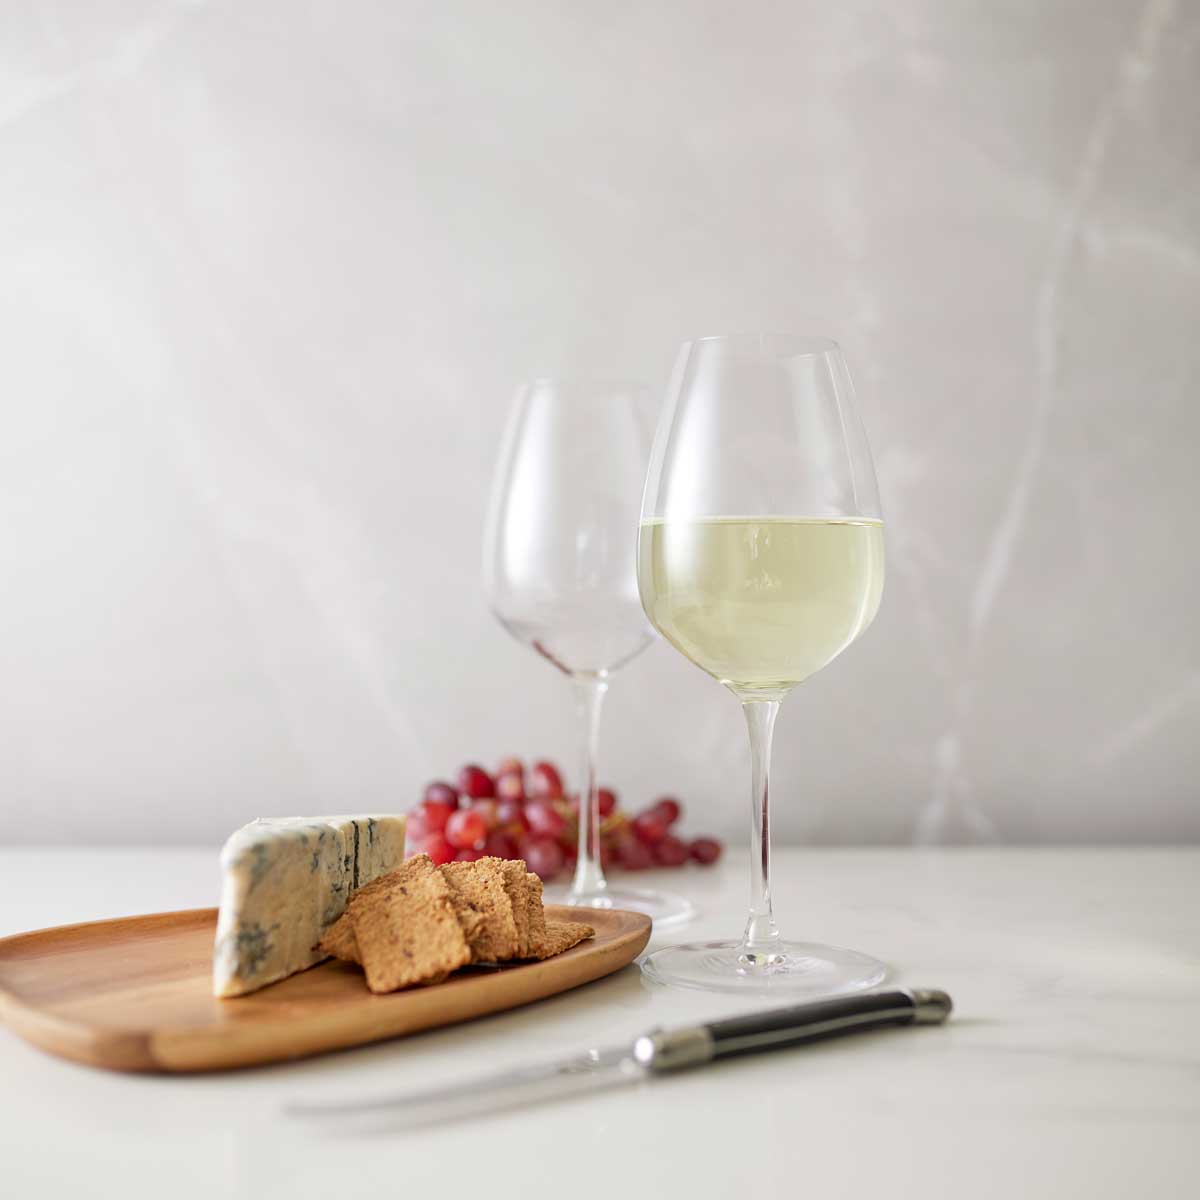 Krosno Duet Wine Glass 460ml Set 2